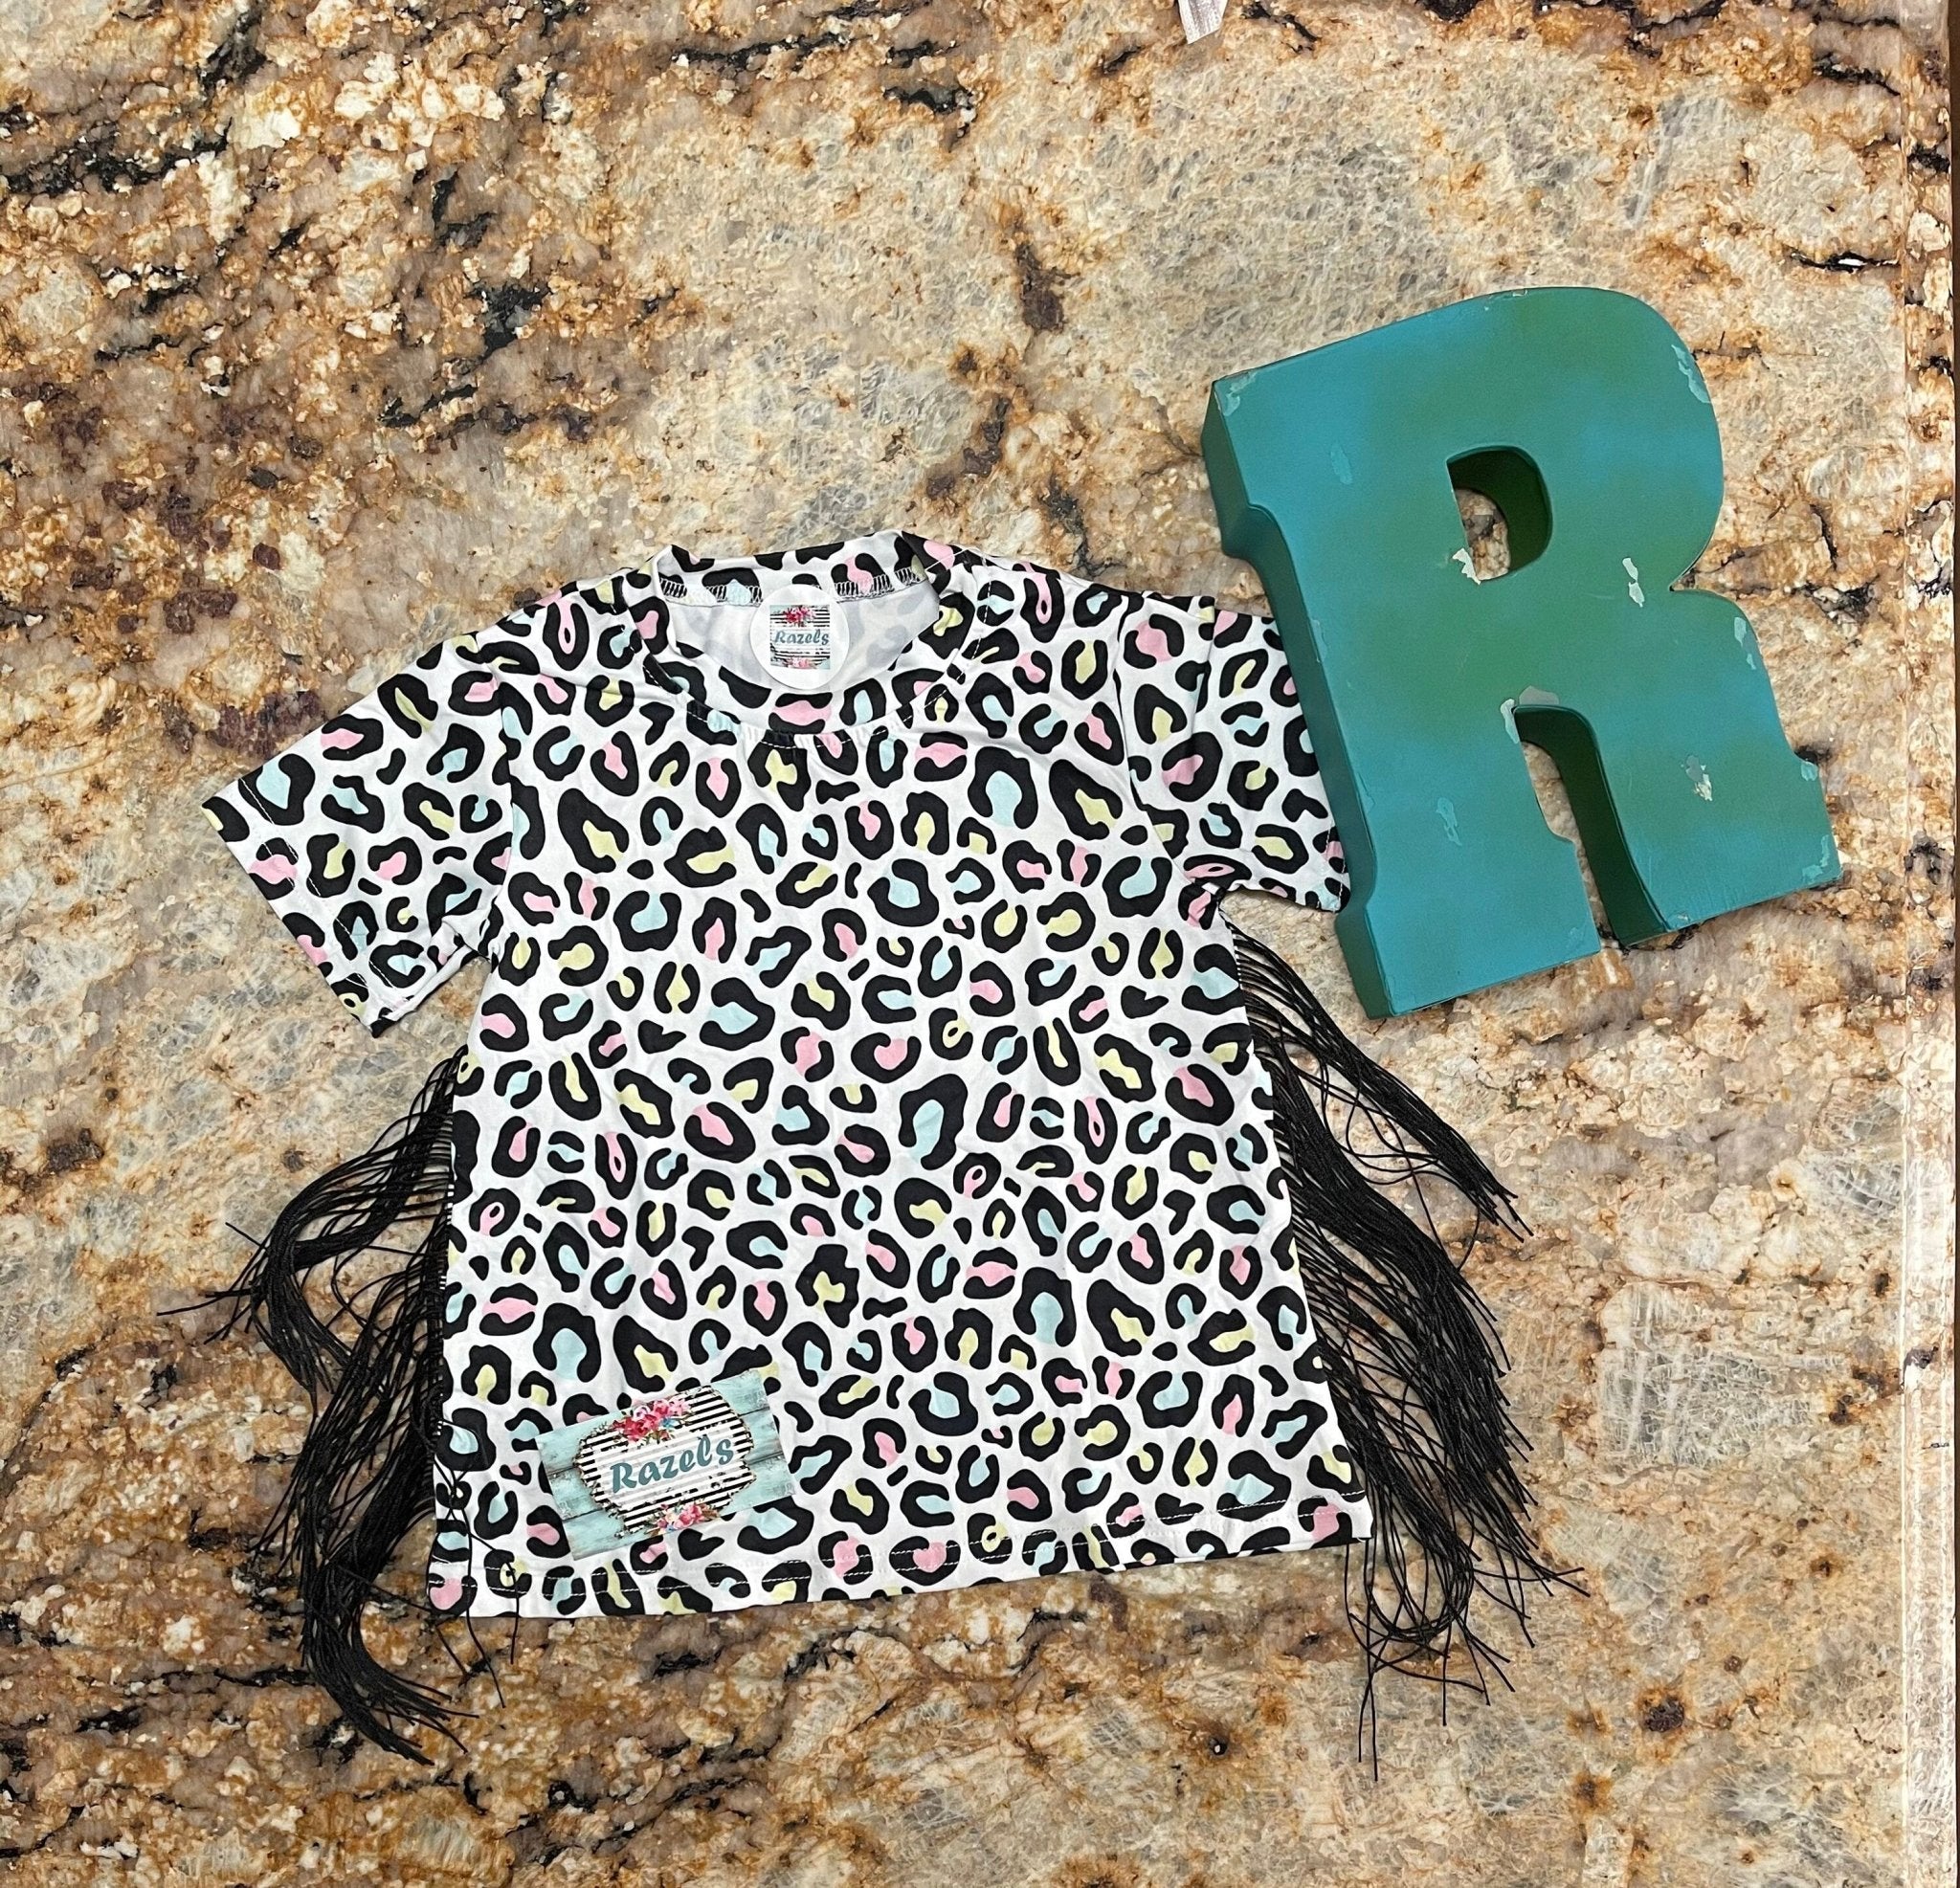 Cheetah Print Fringe Dress | Animal Print BOHO T-Shirt Tunic - Razels